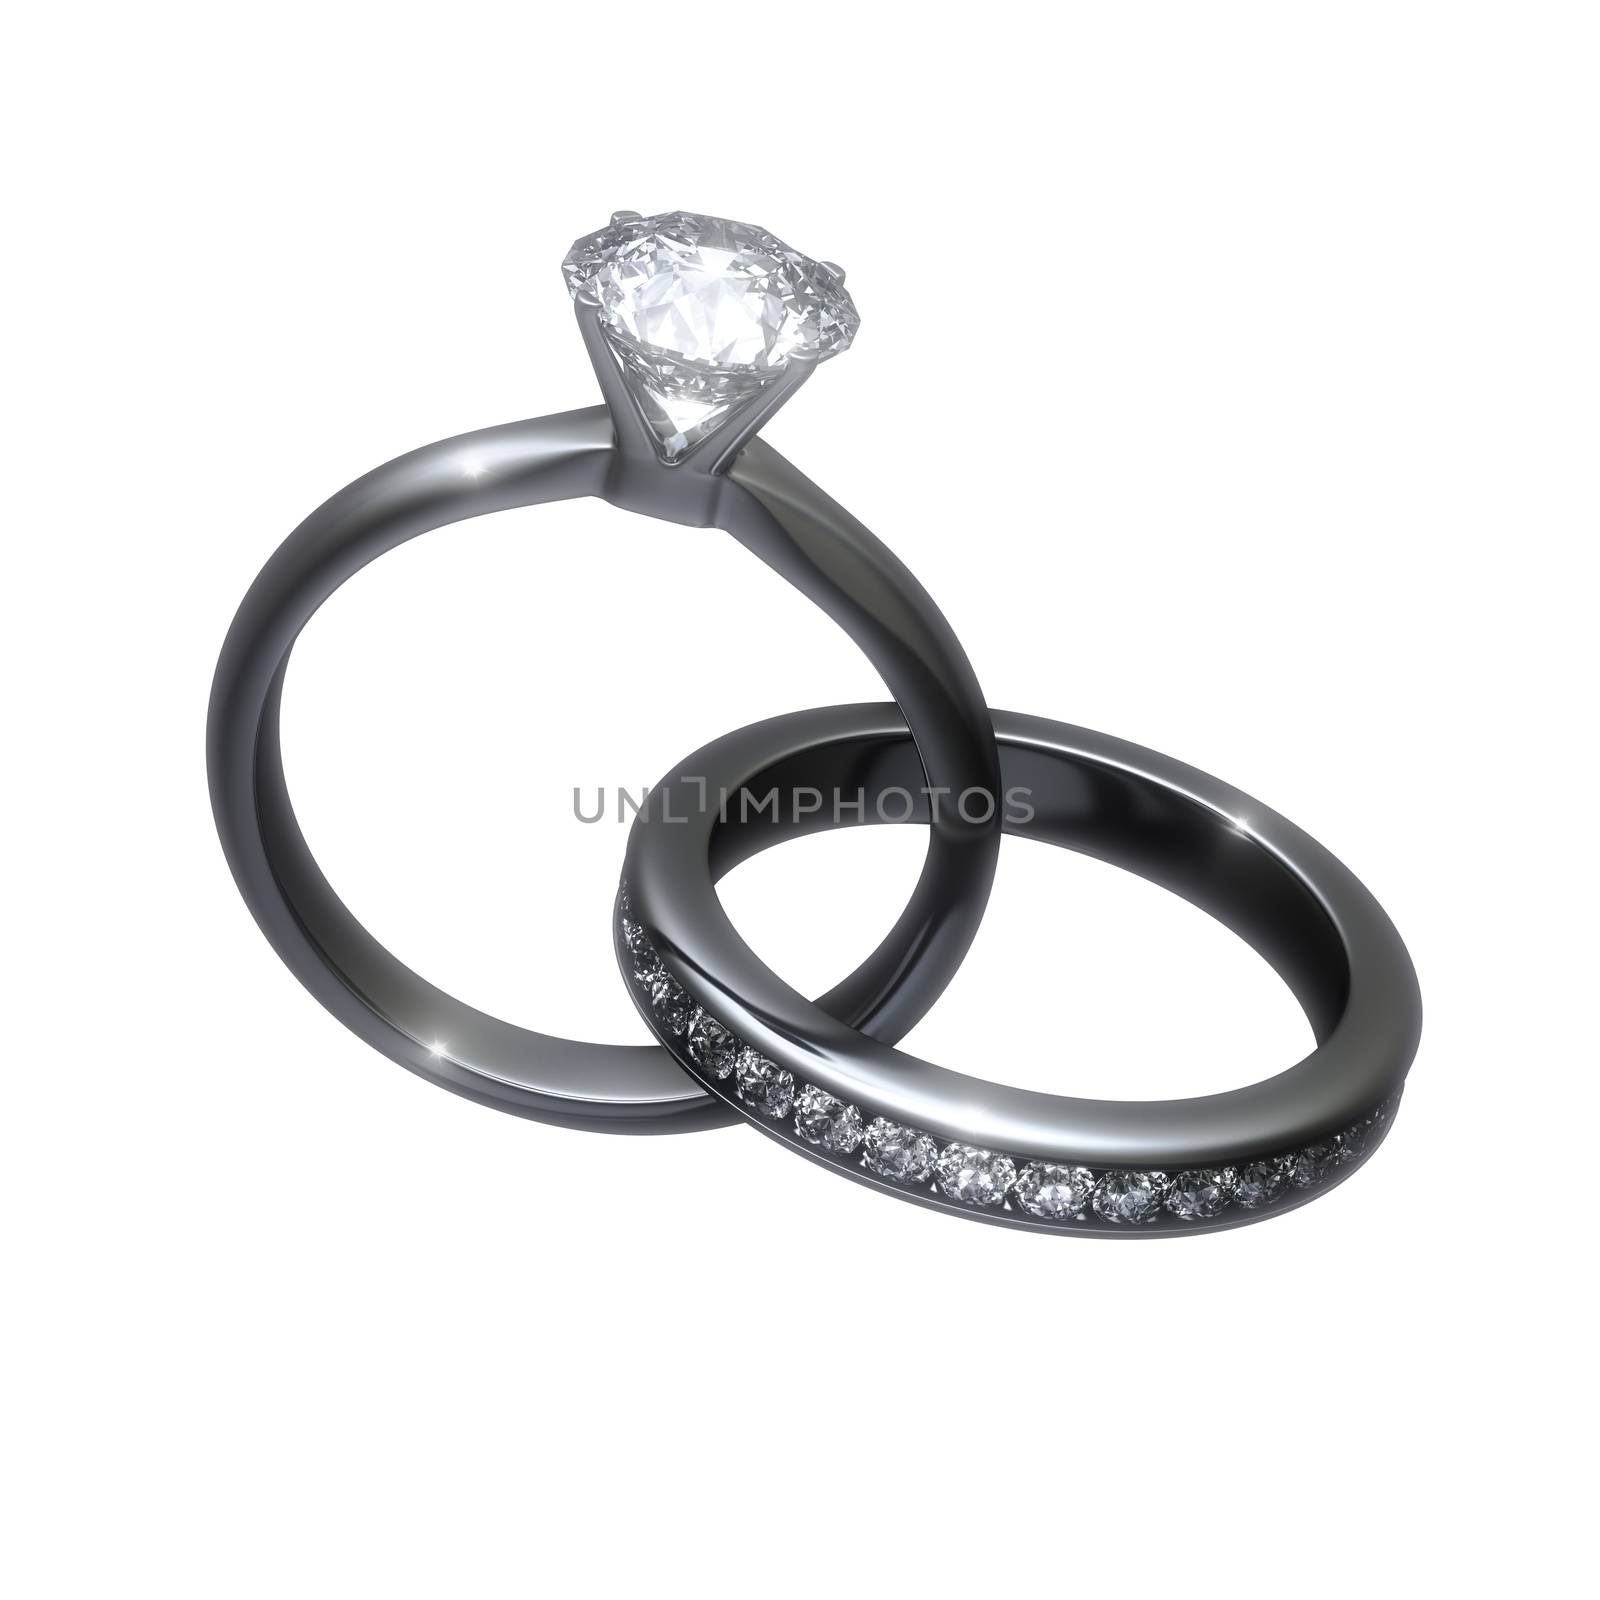 Diamond wedding rings - clipping path by 123dartist